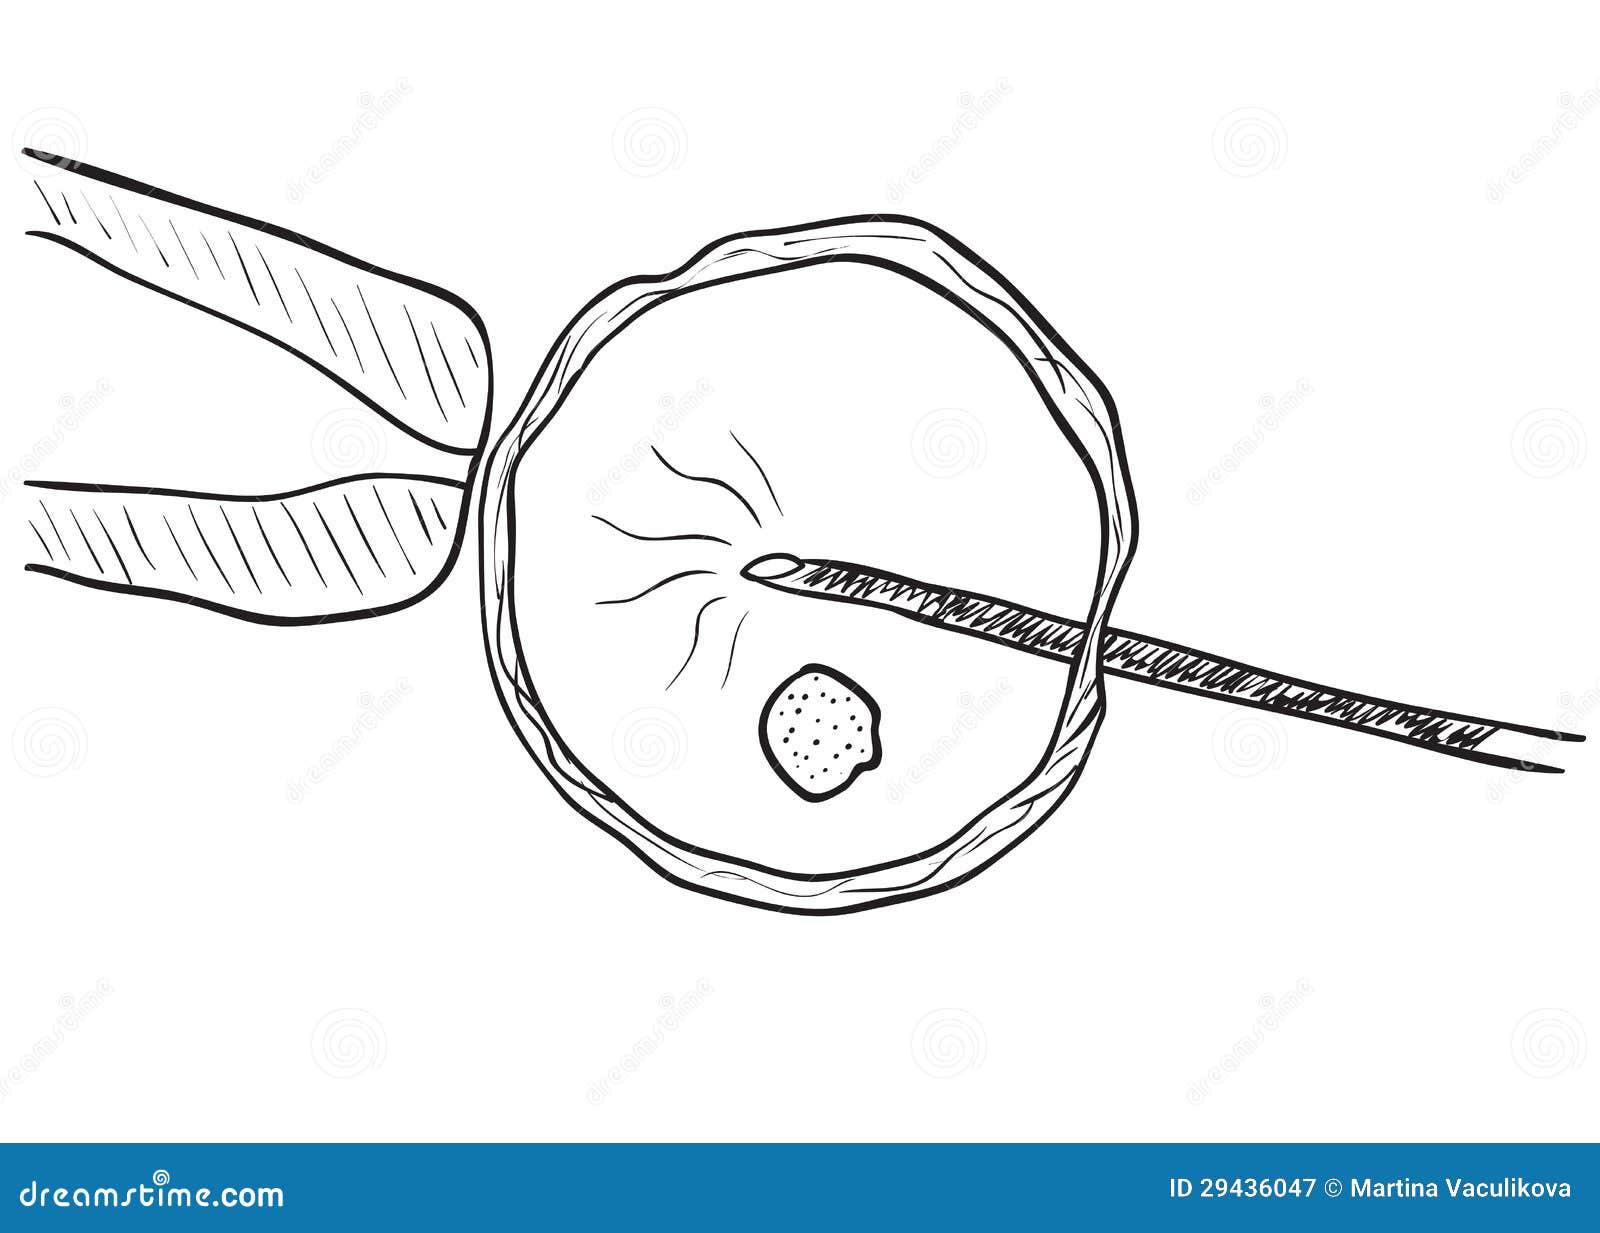 in vitro insemination drawing